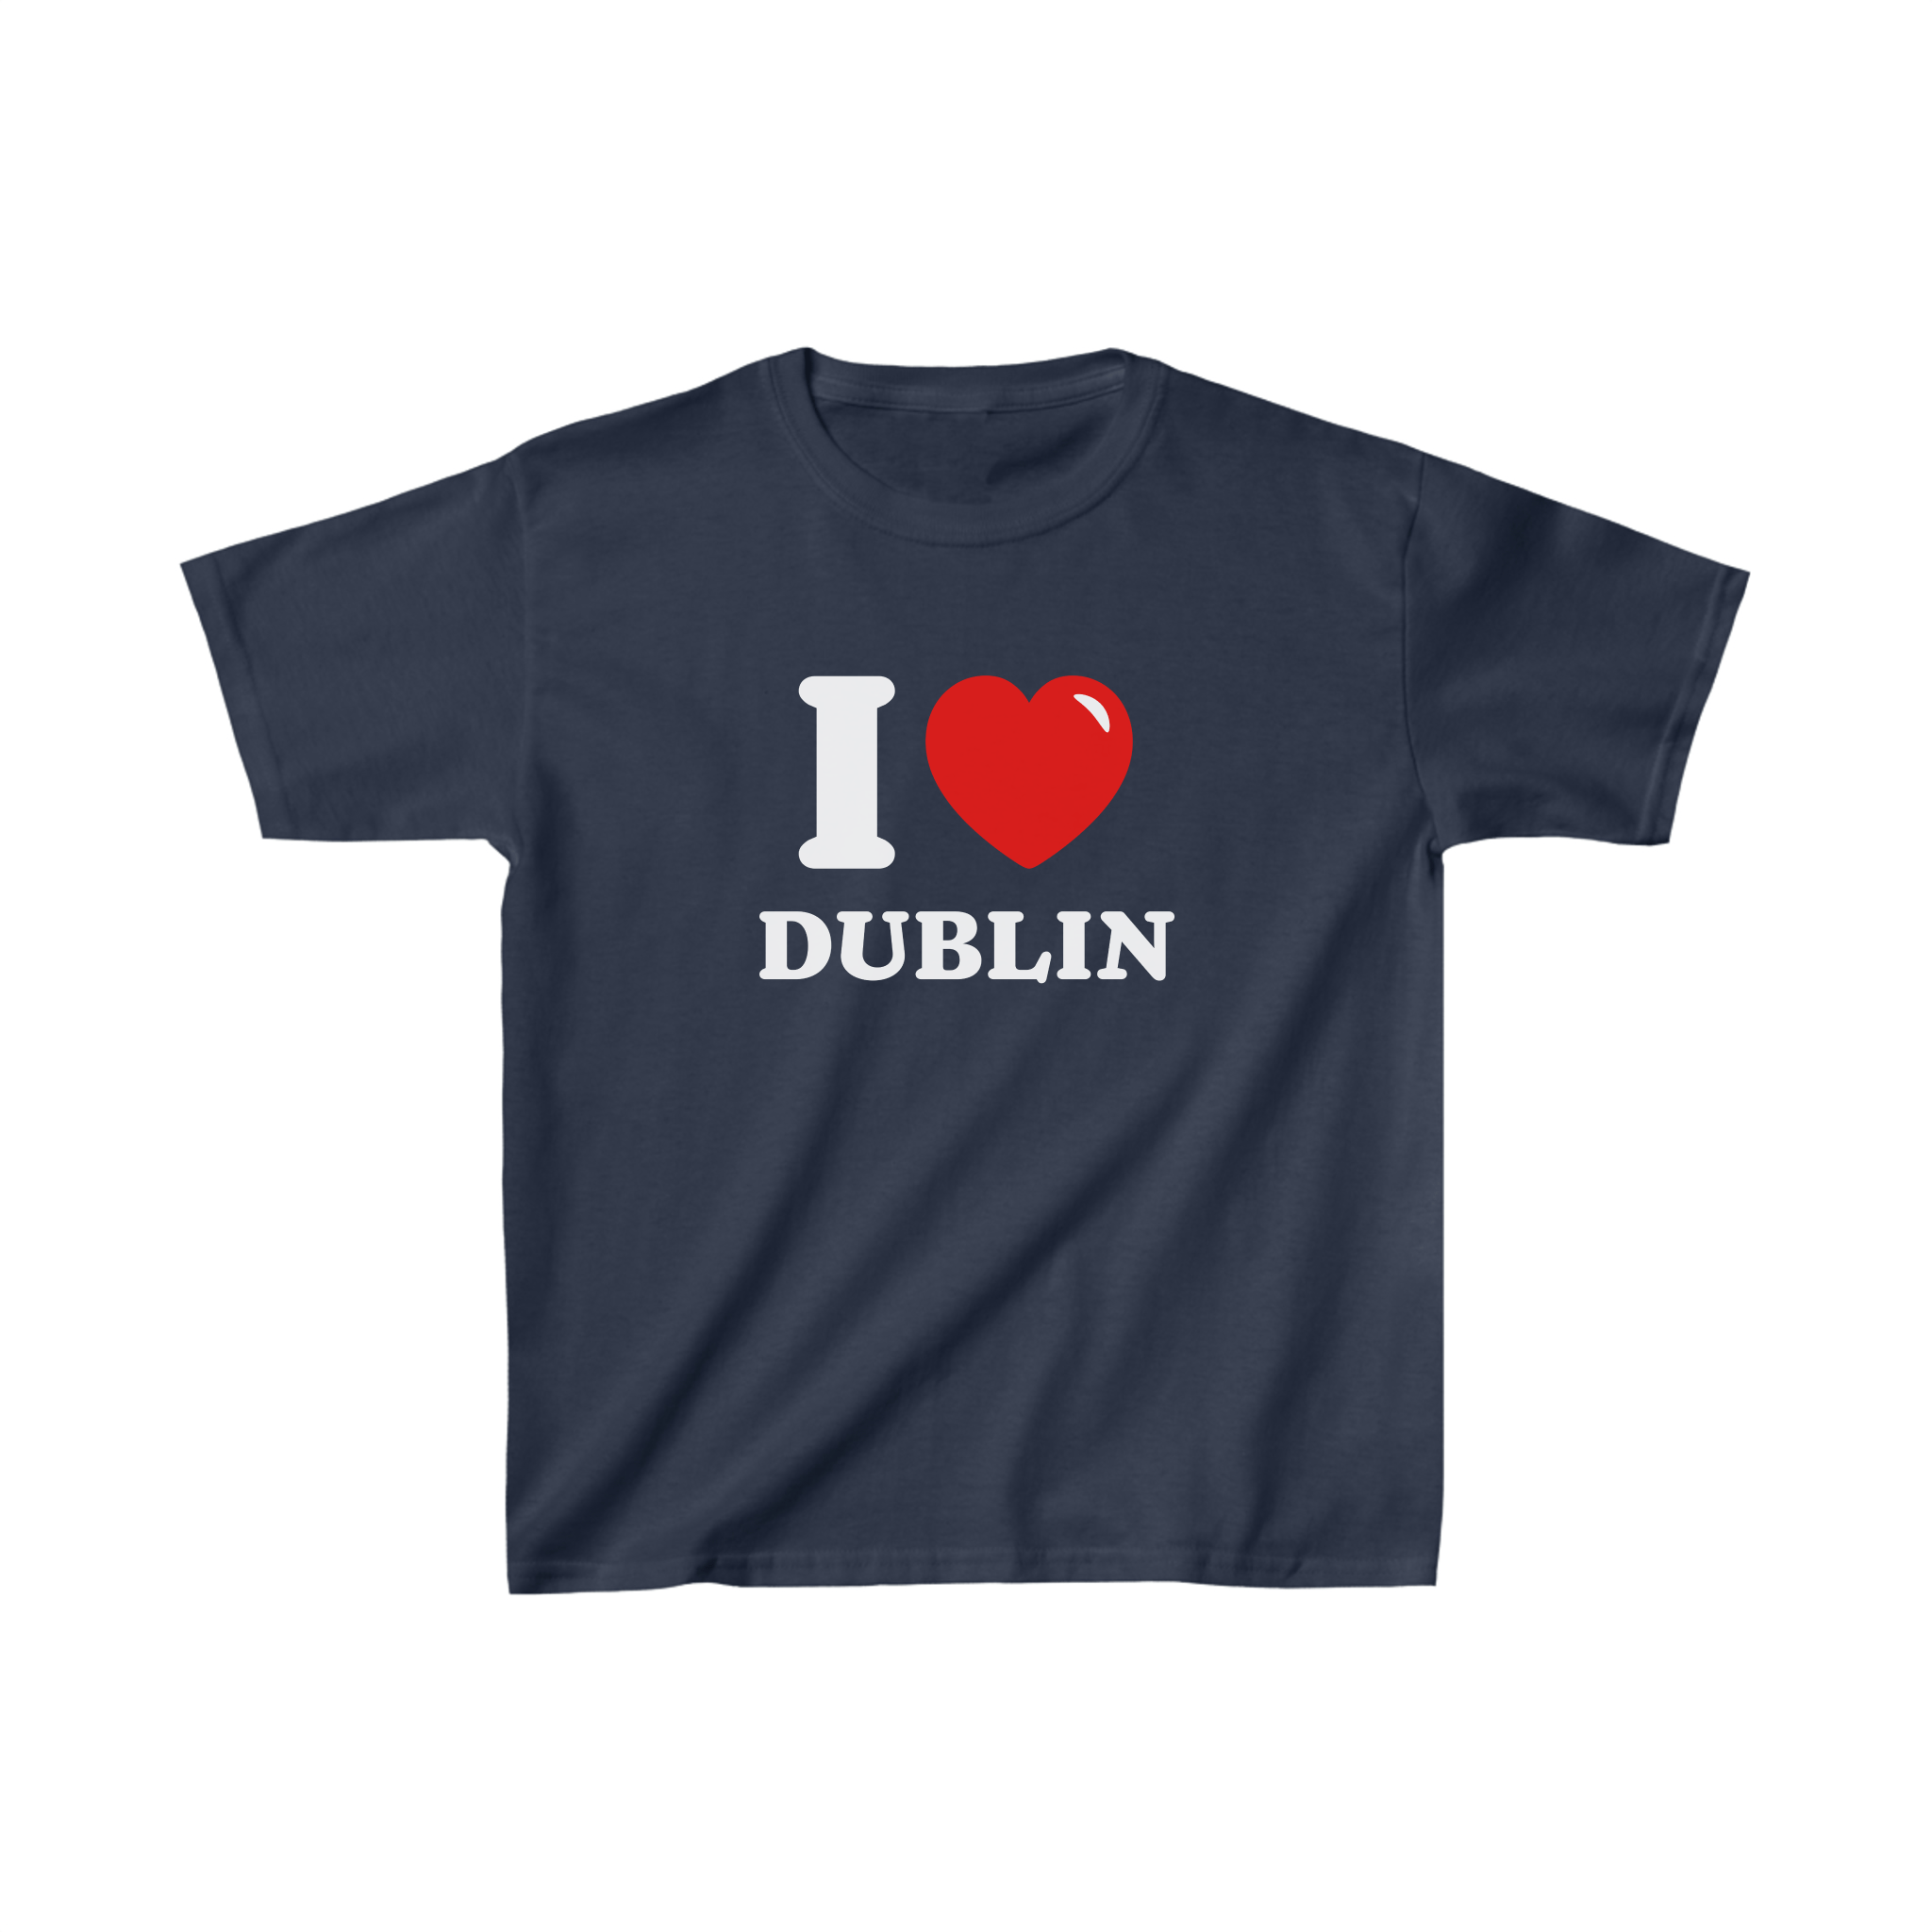 'I love Dublin' baby tee - In Print We Trust